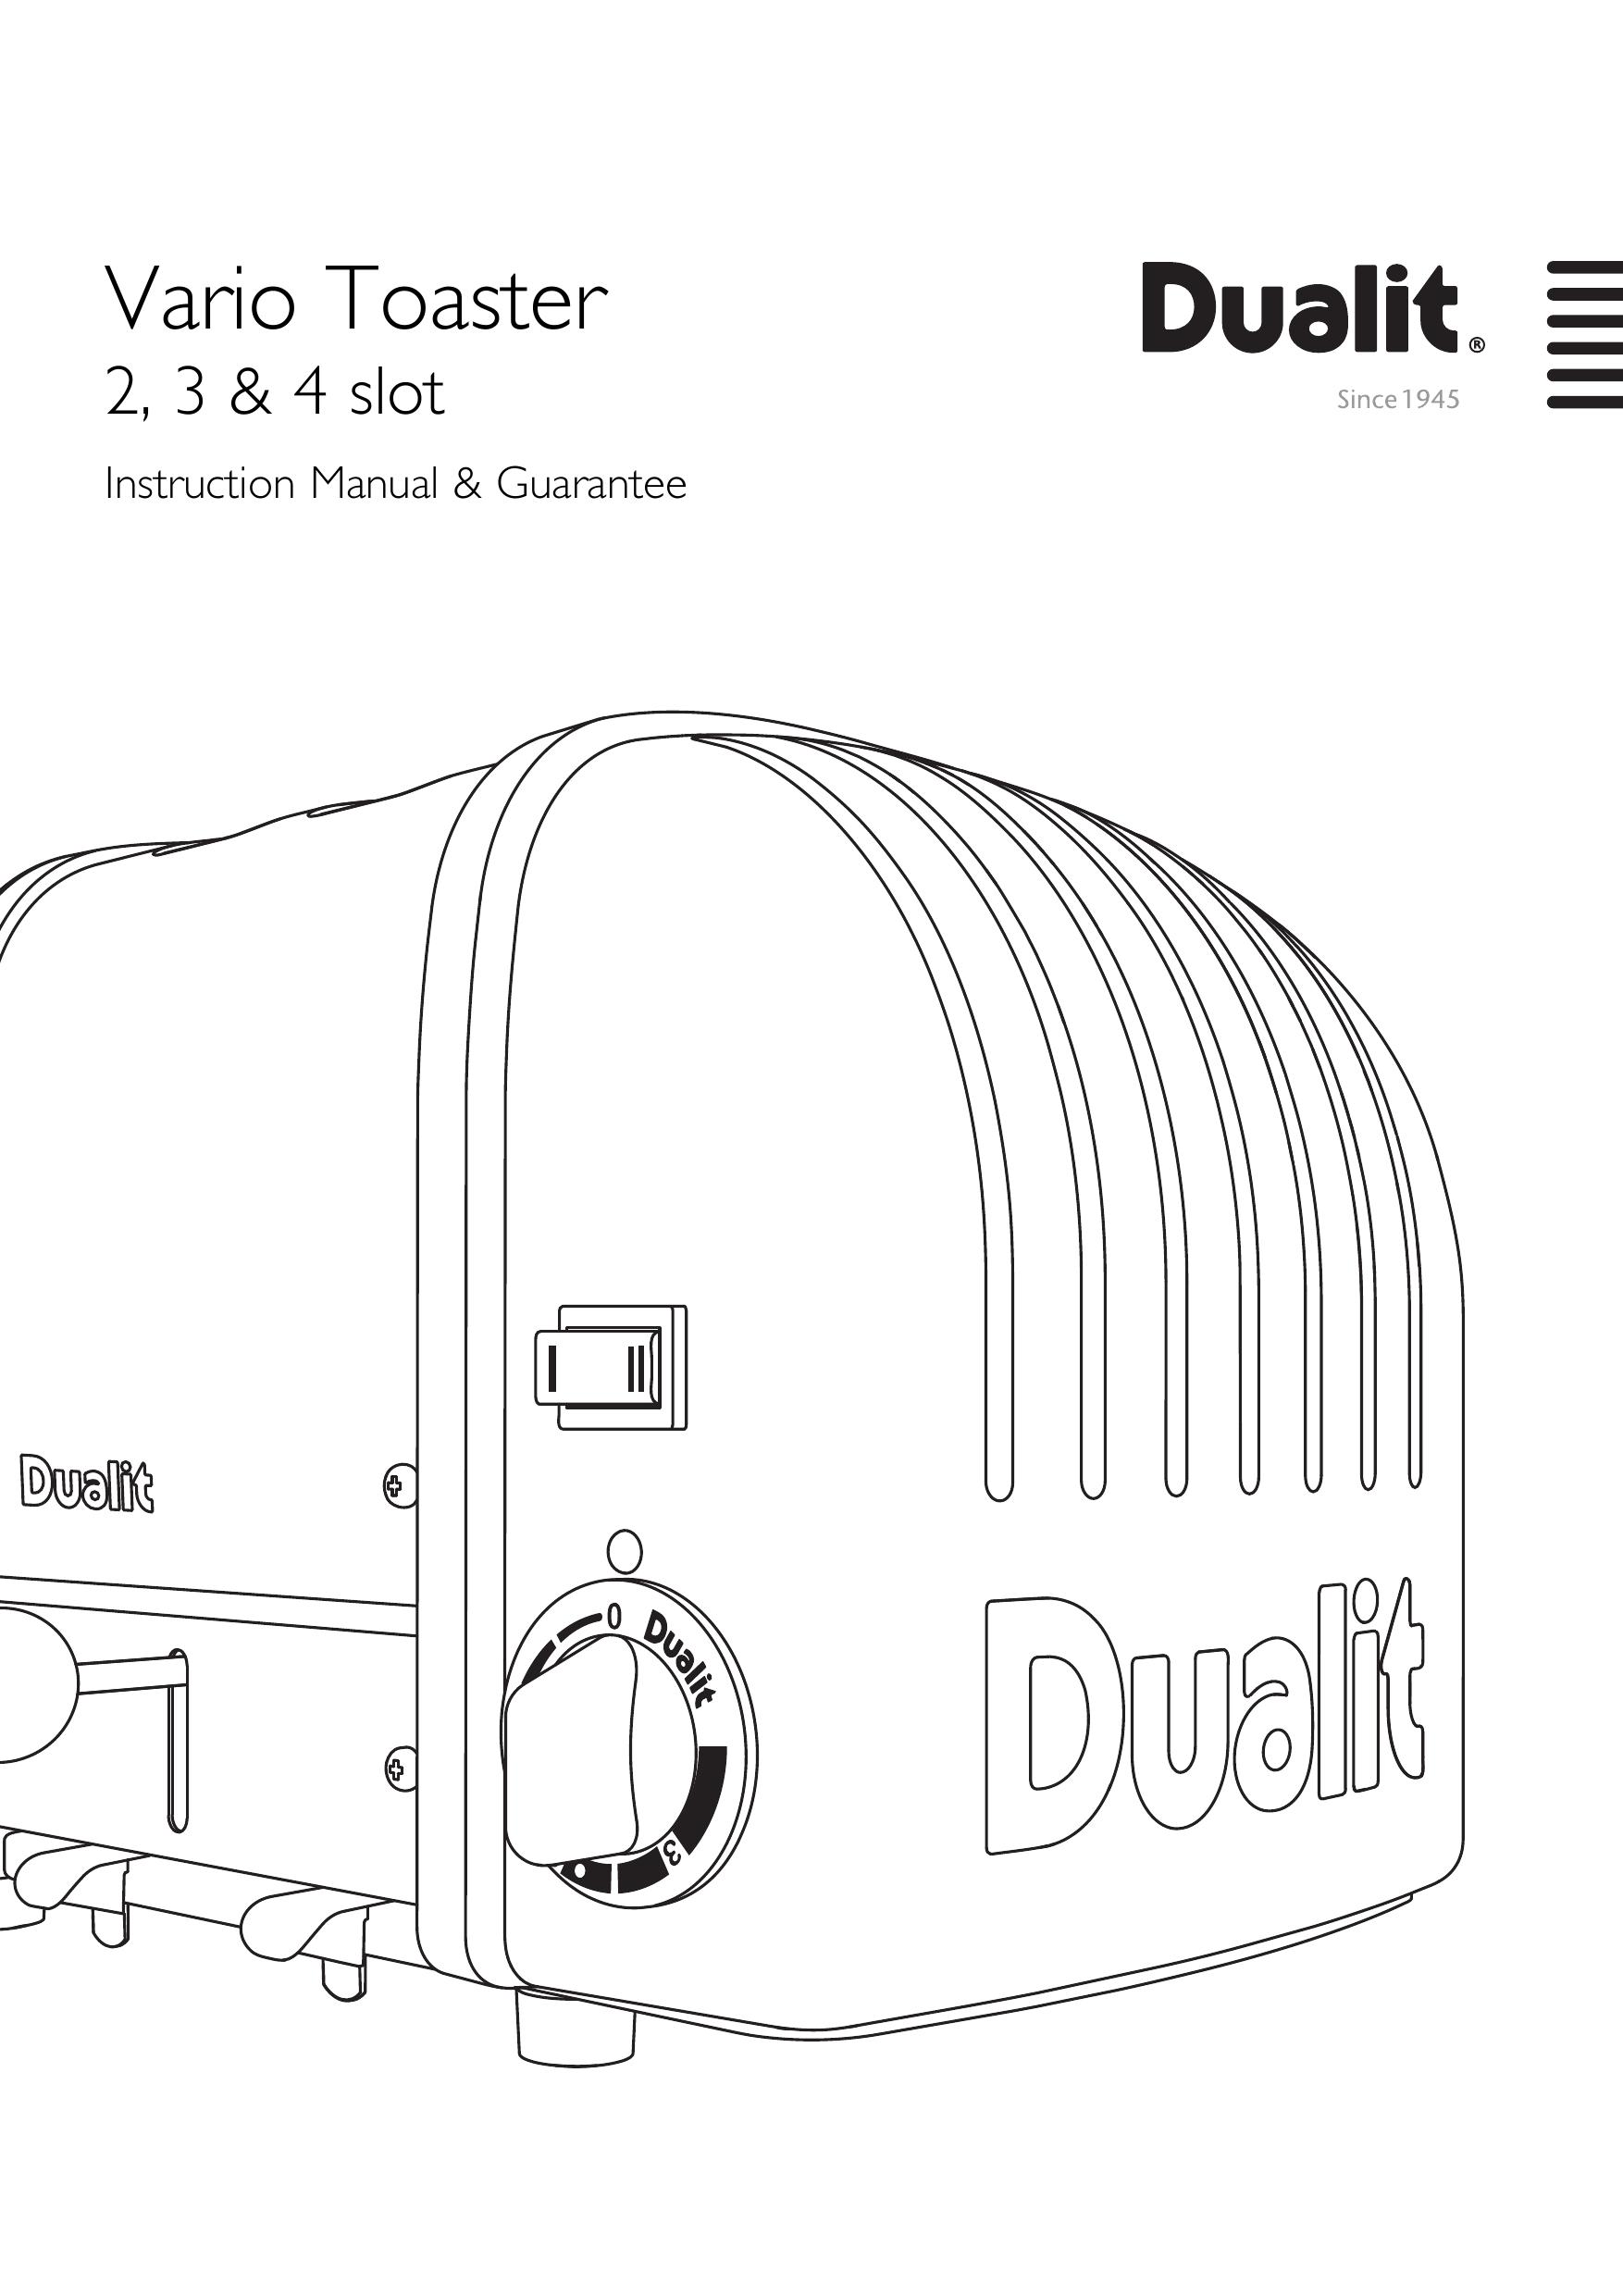 Dualit 20294 Toaster User Manual